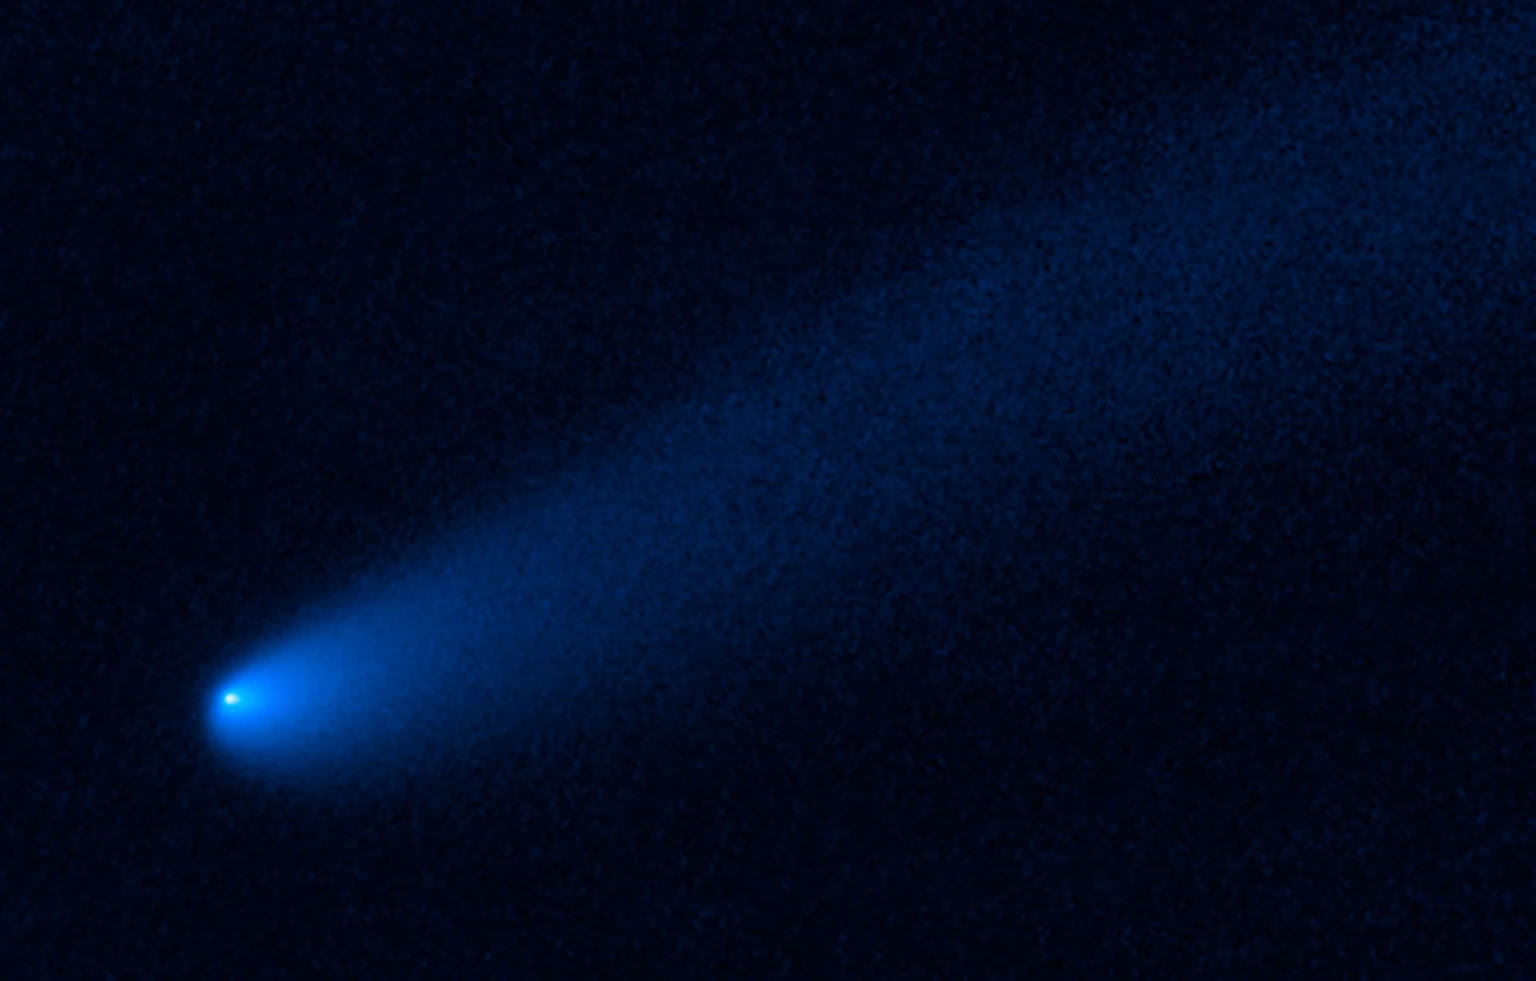 Leonard(C/2021 A1)彗星正在绕过地球 12月会有一次千载难逢的观测机会